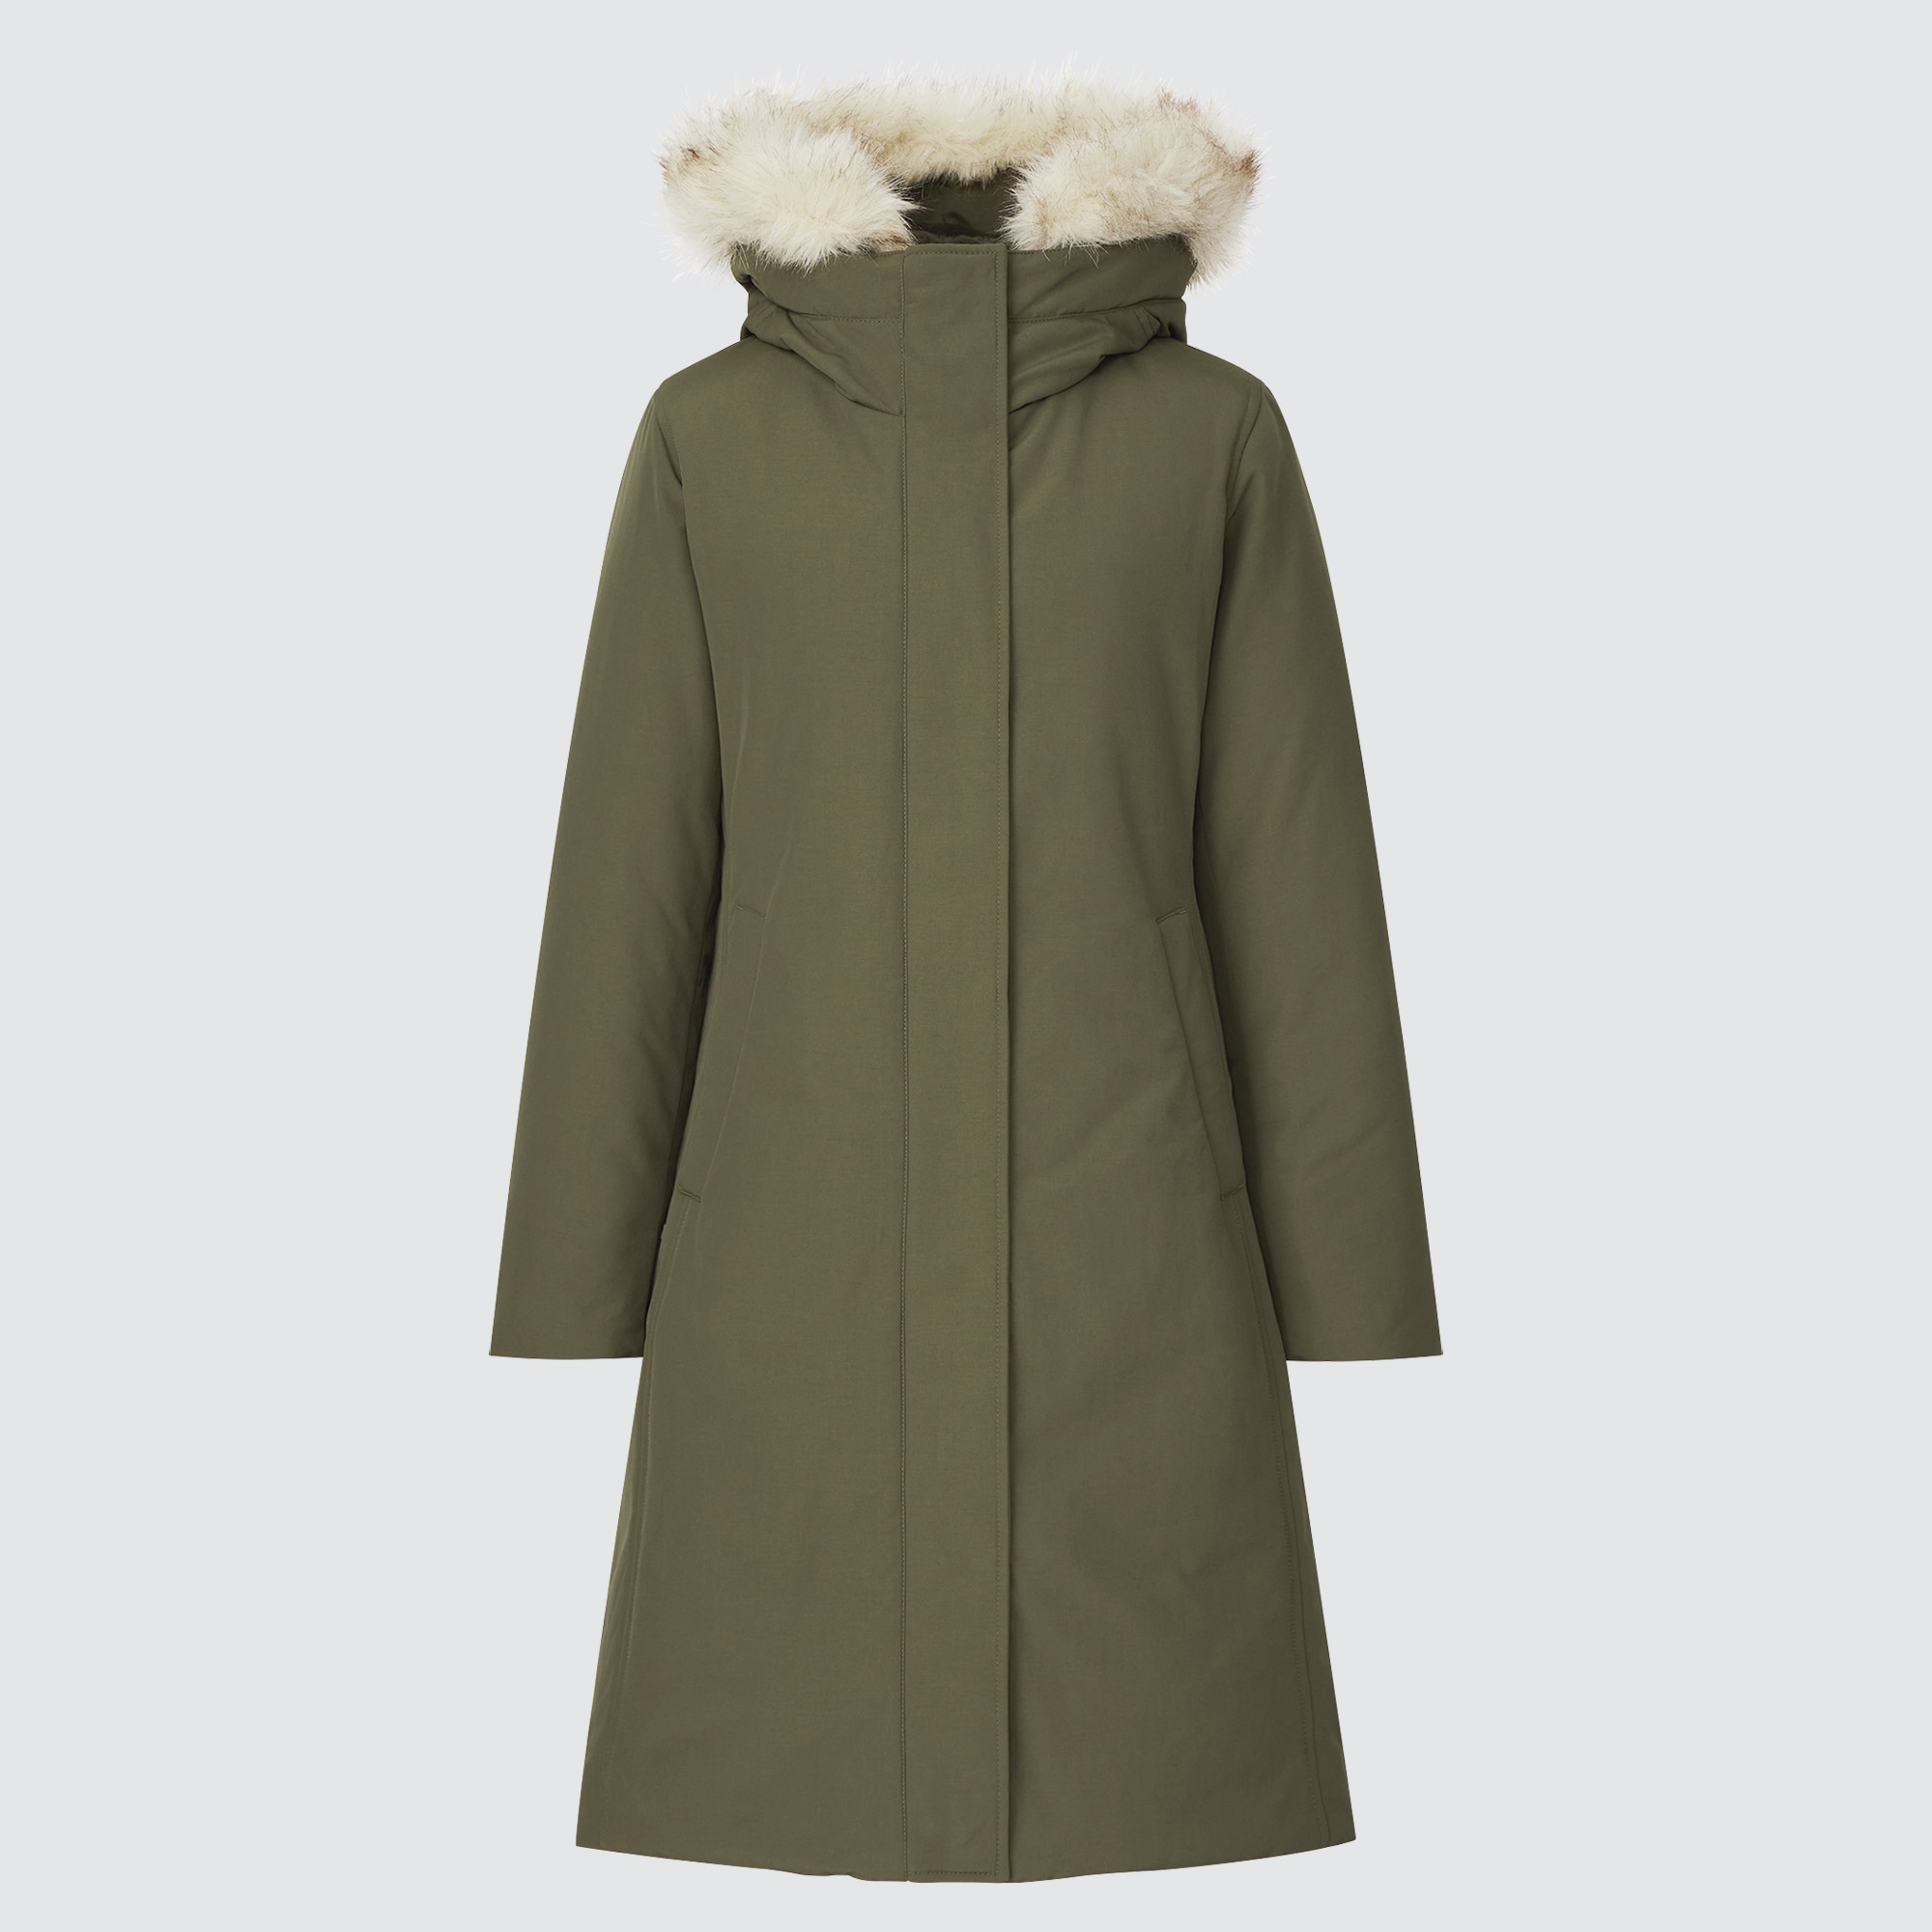 Uniqlo Seamless Down Long Coat  Long winter coats women, Long coat women, Long  coat